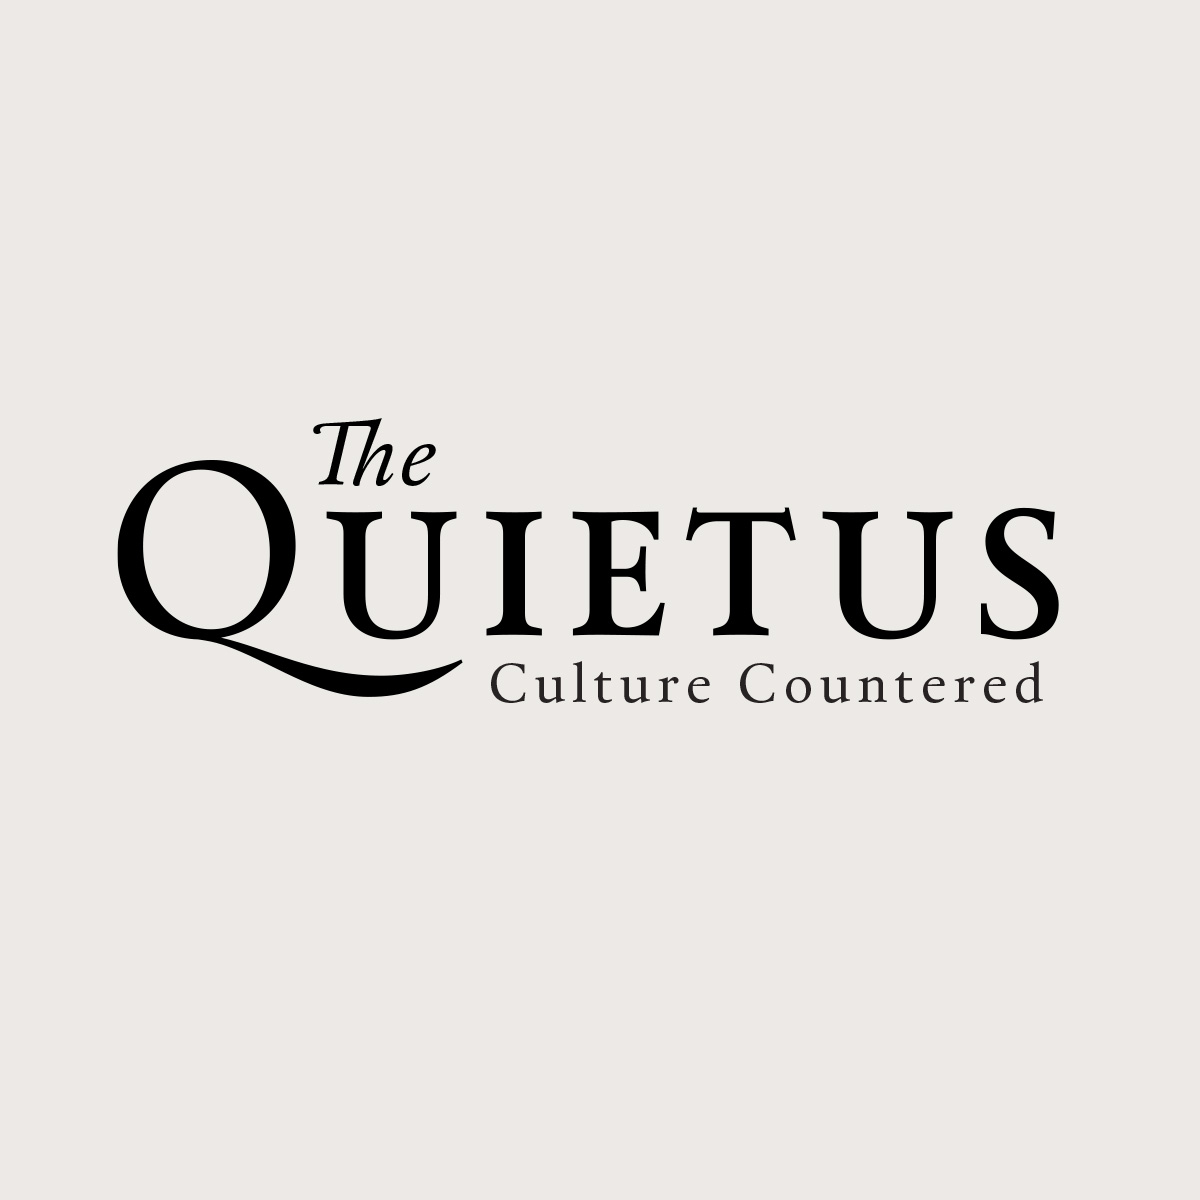 Good news! The Quietus is regenerating. Updates incoming. #CultureCountered